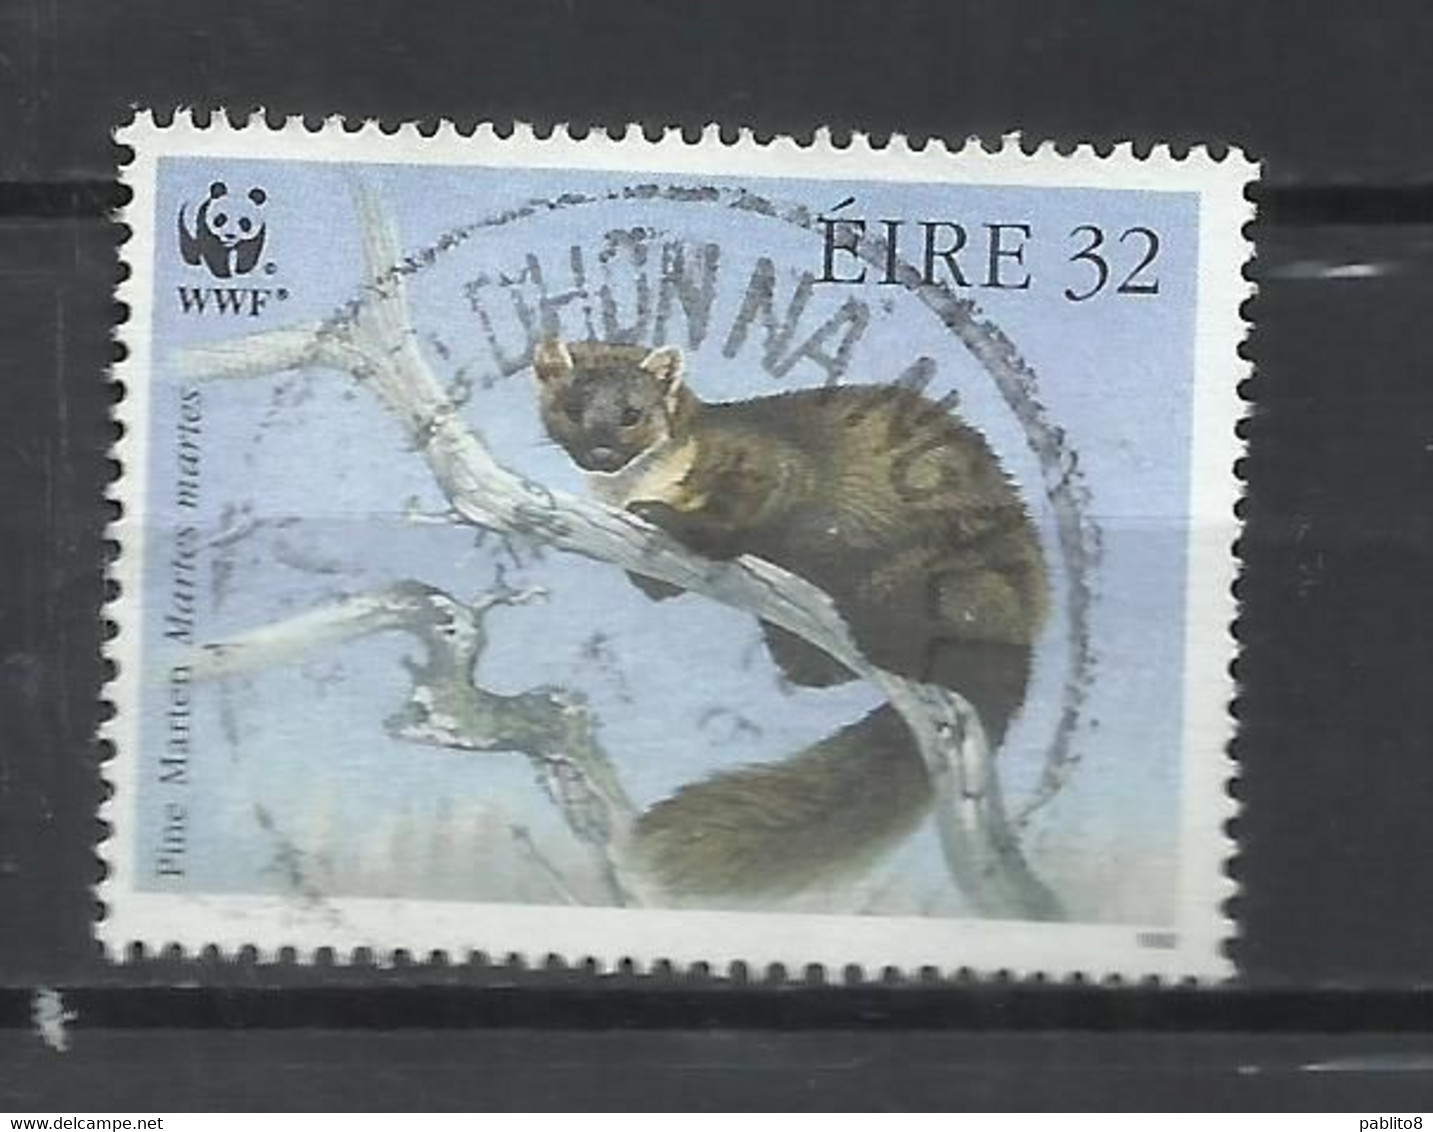 EIRE IRELAND IRLANDA 1992 WWF WORLD WILDLIFE FUND PINE MARTEN IN TREE 32p USED USATO OBLITERE' - Used Stamps